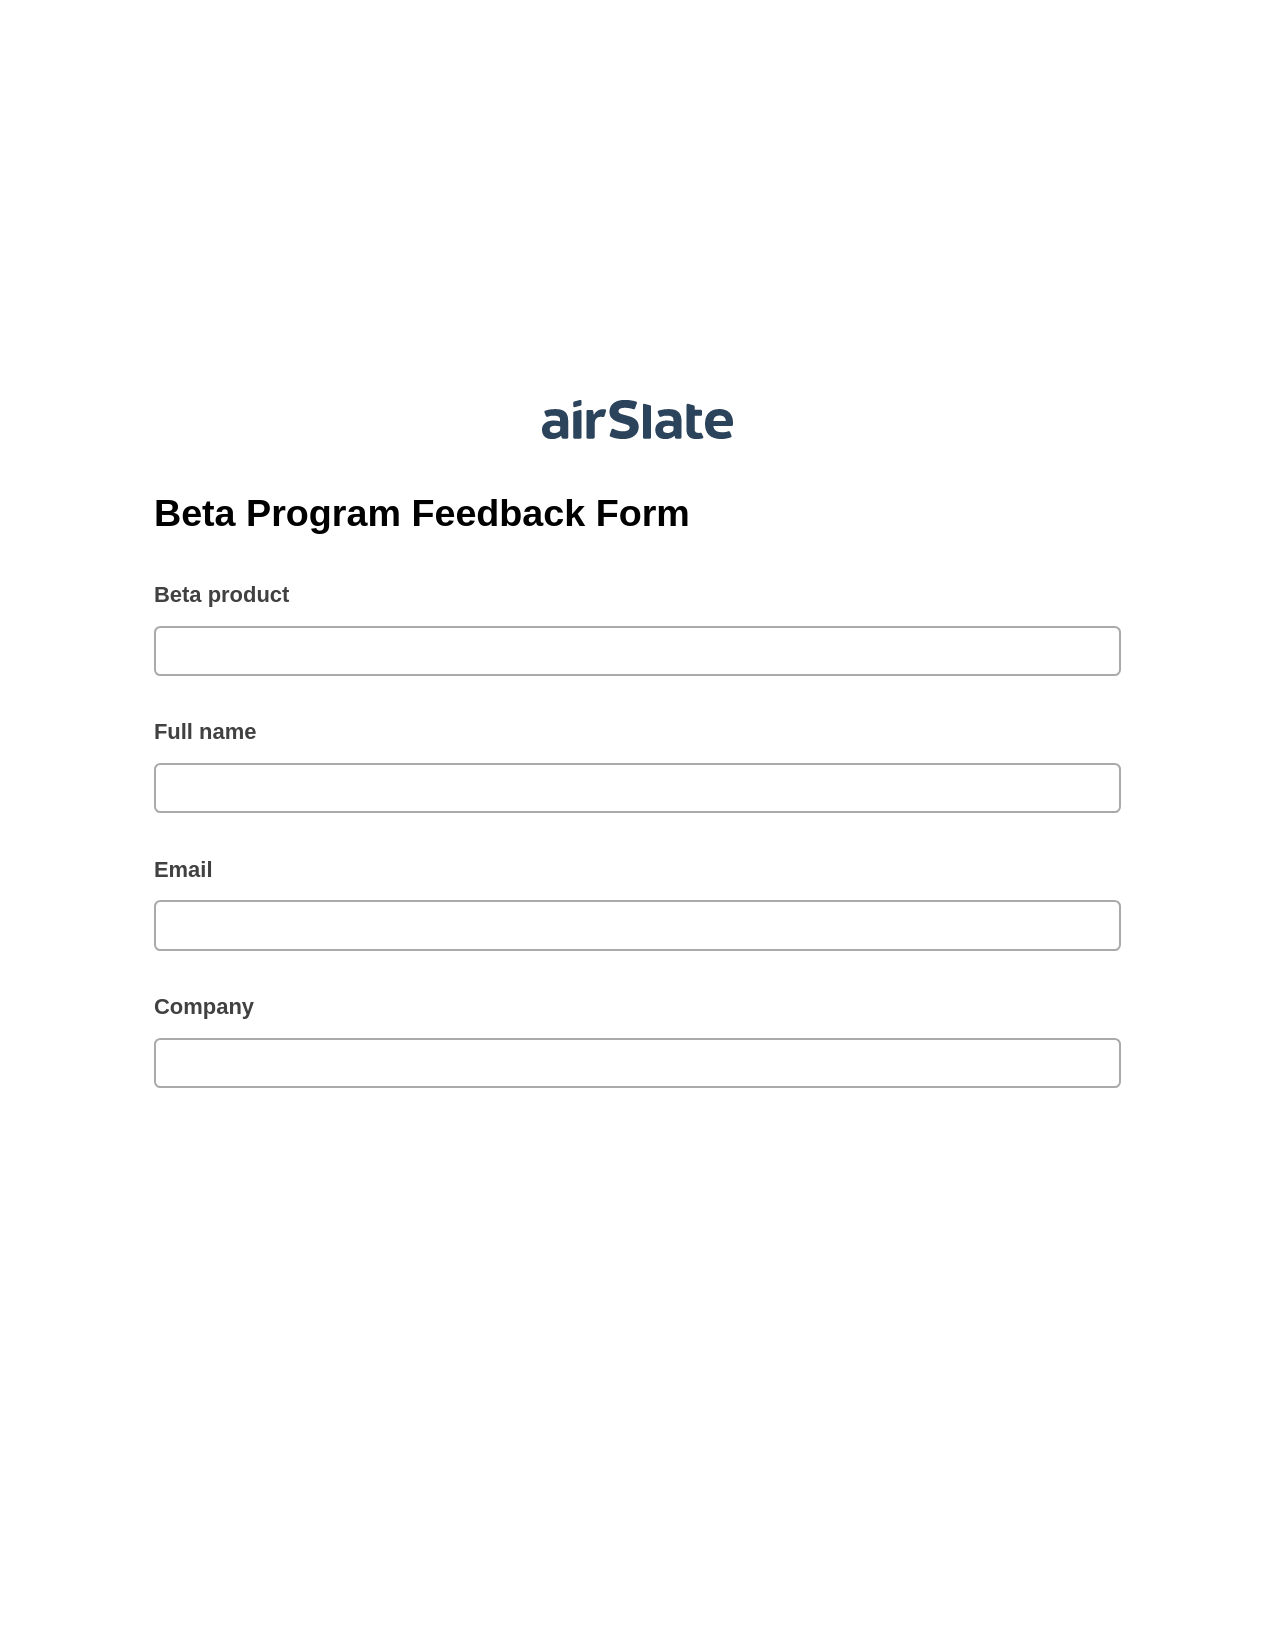 Beta Program Feedback Form Pre-fill Slate from MS Dynamics 365 Records Bot, Slack Notification Bot, Post-finish Document Bot